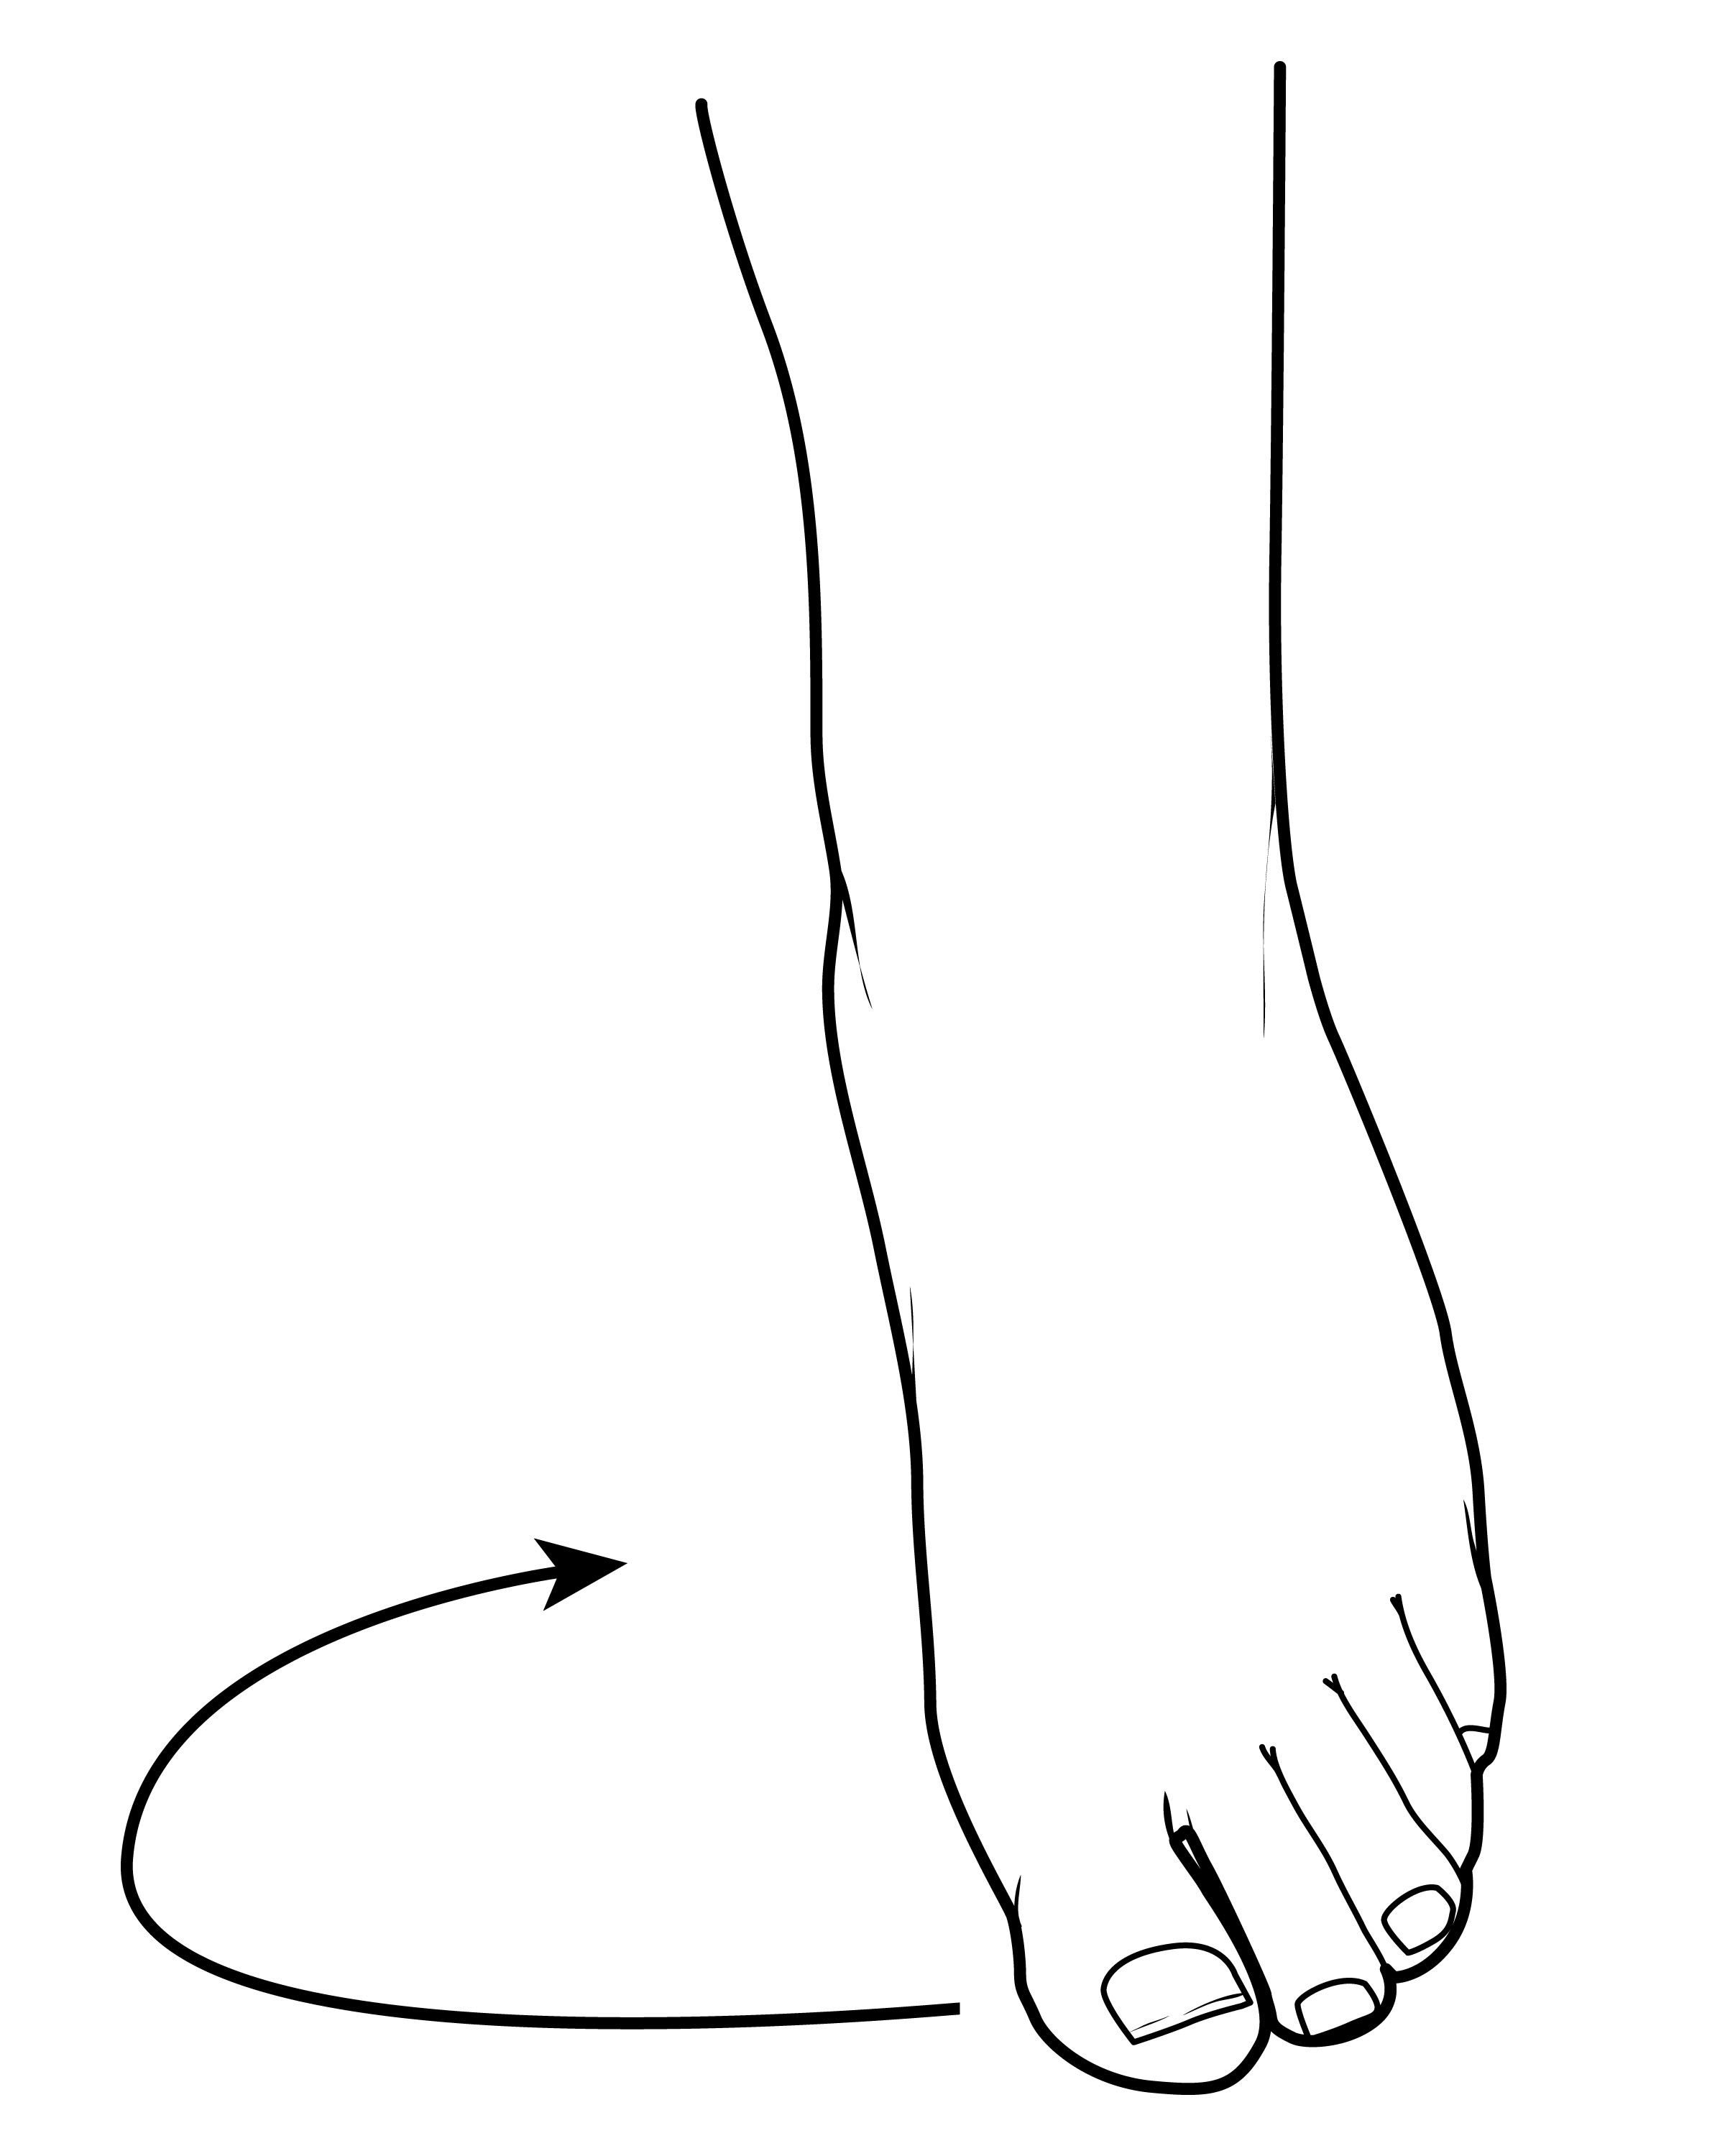 Ankle range of motion 